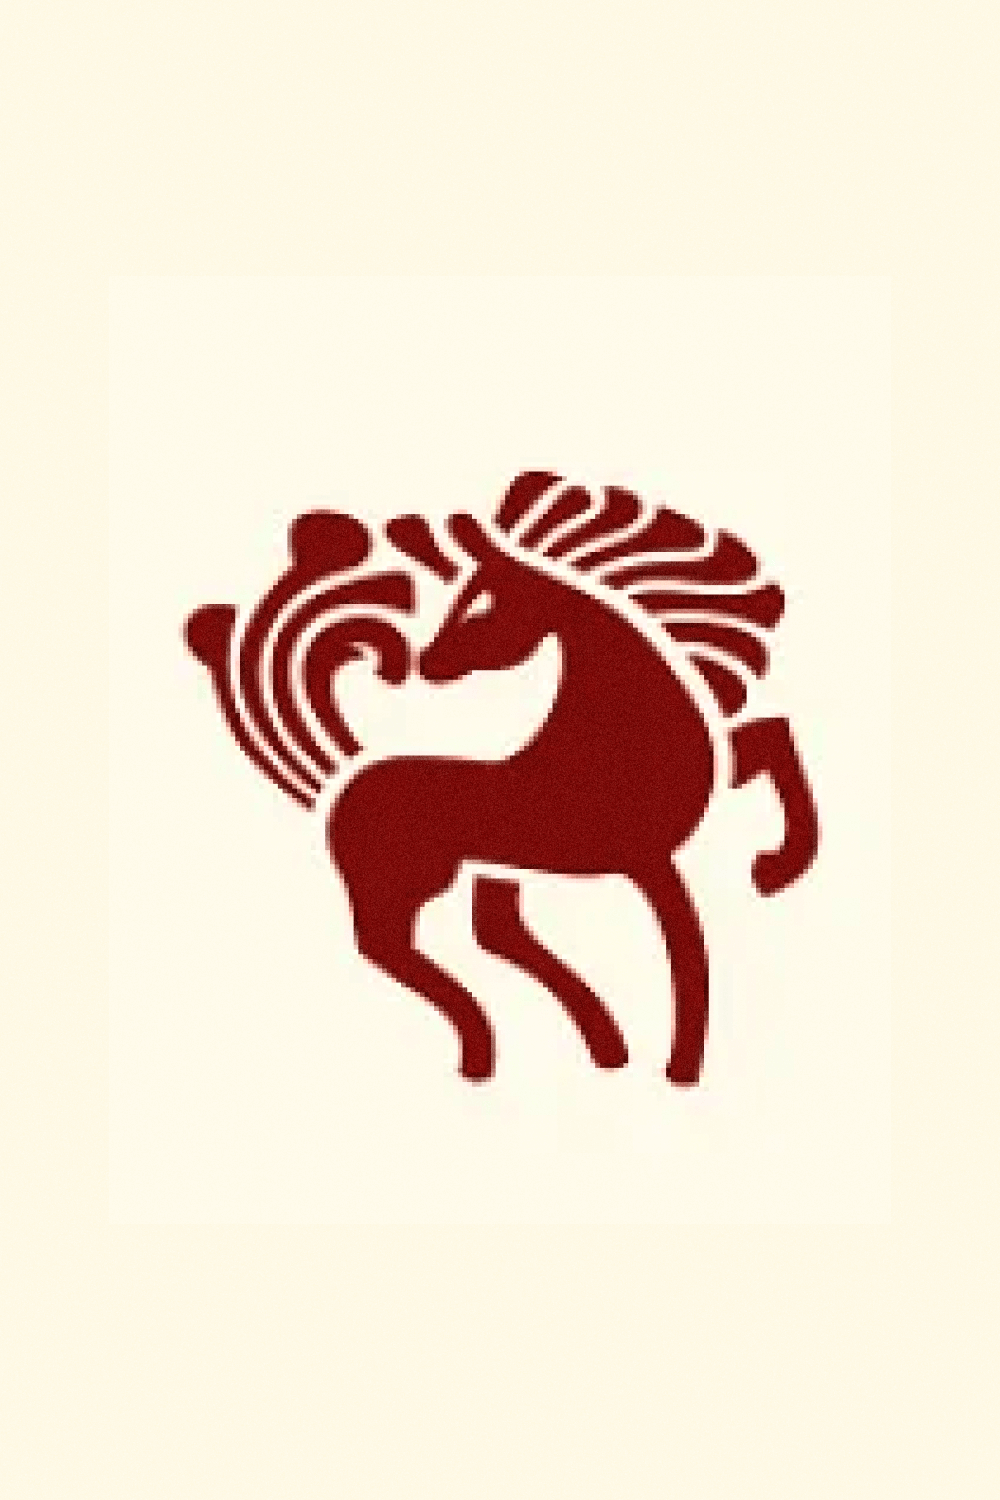 Horse circle logo.